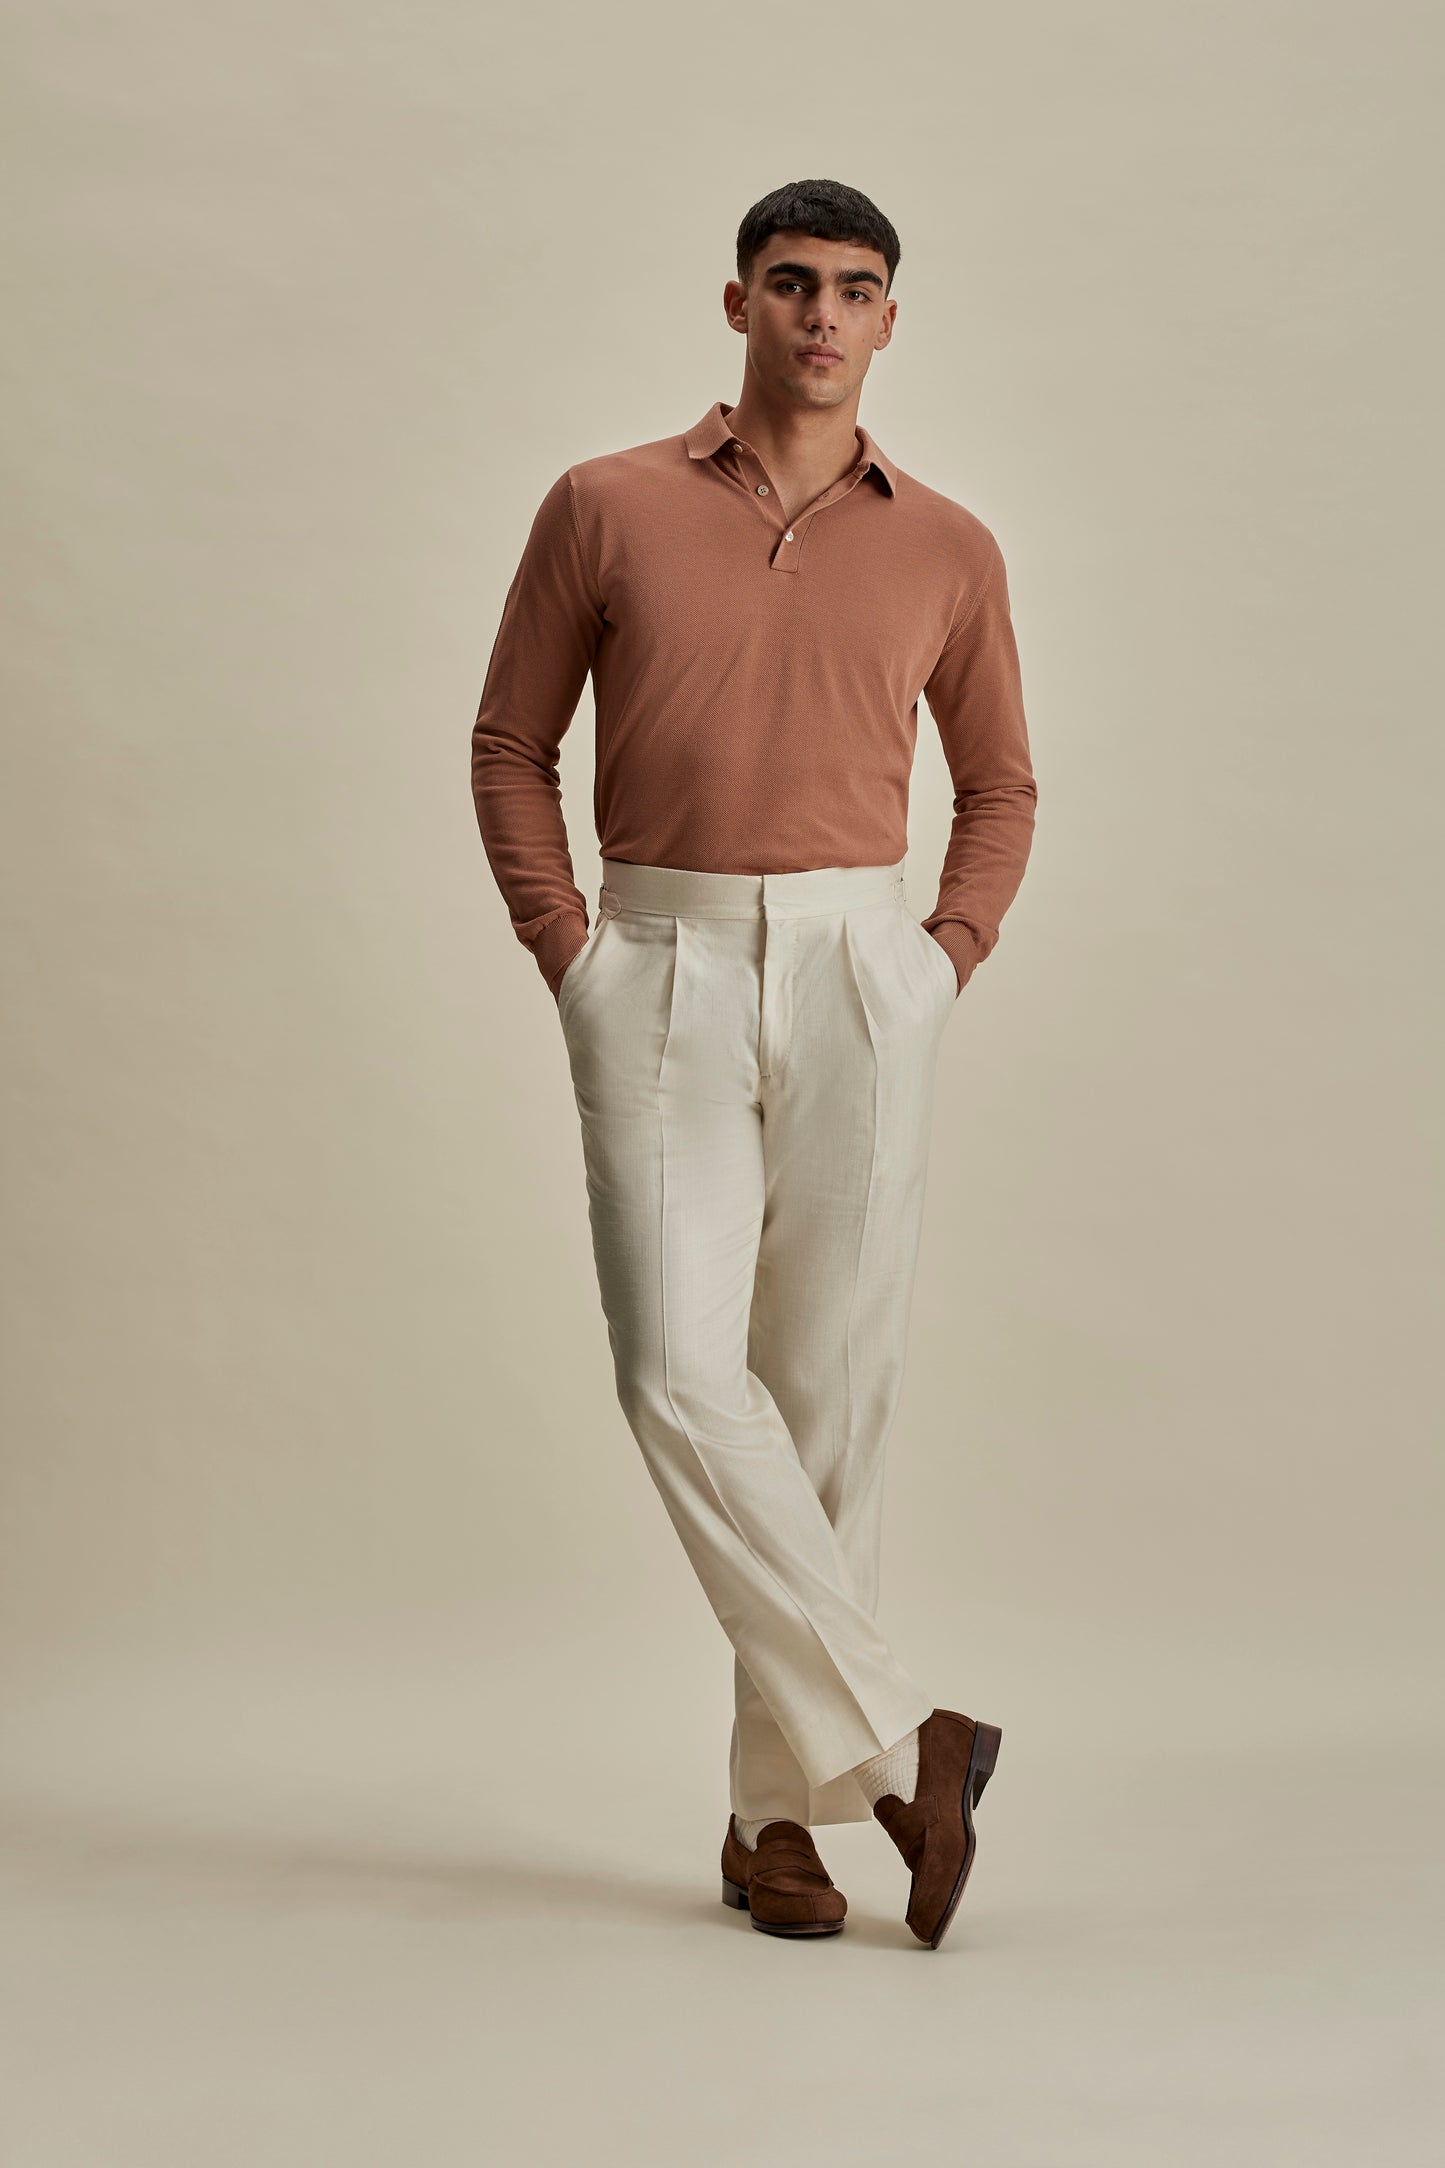 Cotton Air Crepe Long Sleeve Polo Shirt Burnt Orange Full Length Model Image